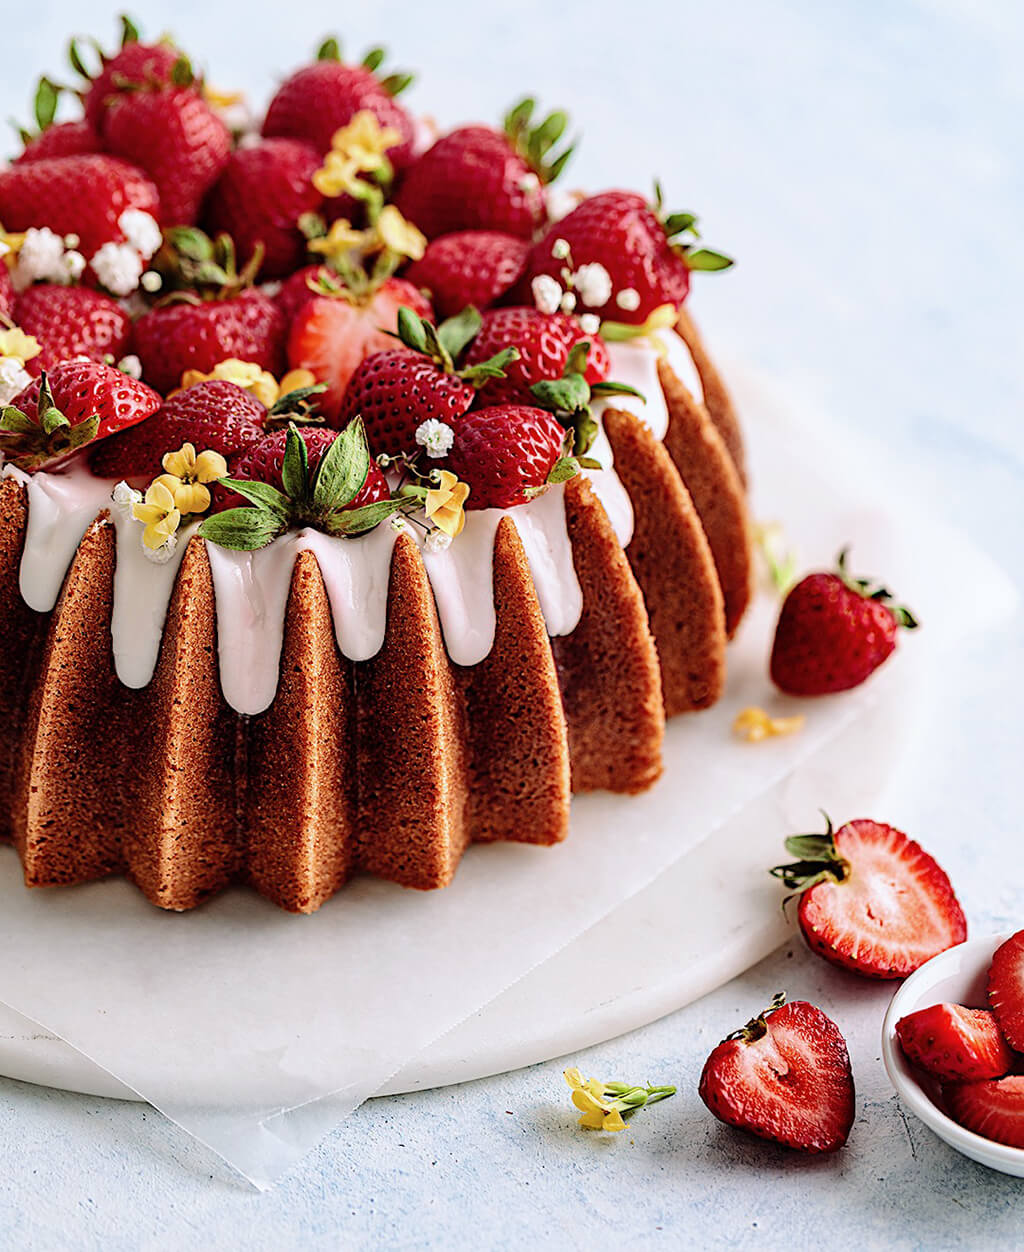 https://www.californiastrawberries.com/wp-content/uploads/2020/05/Strawberry-Swirl-Bundt-Cake-1.jpg